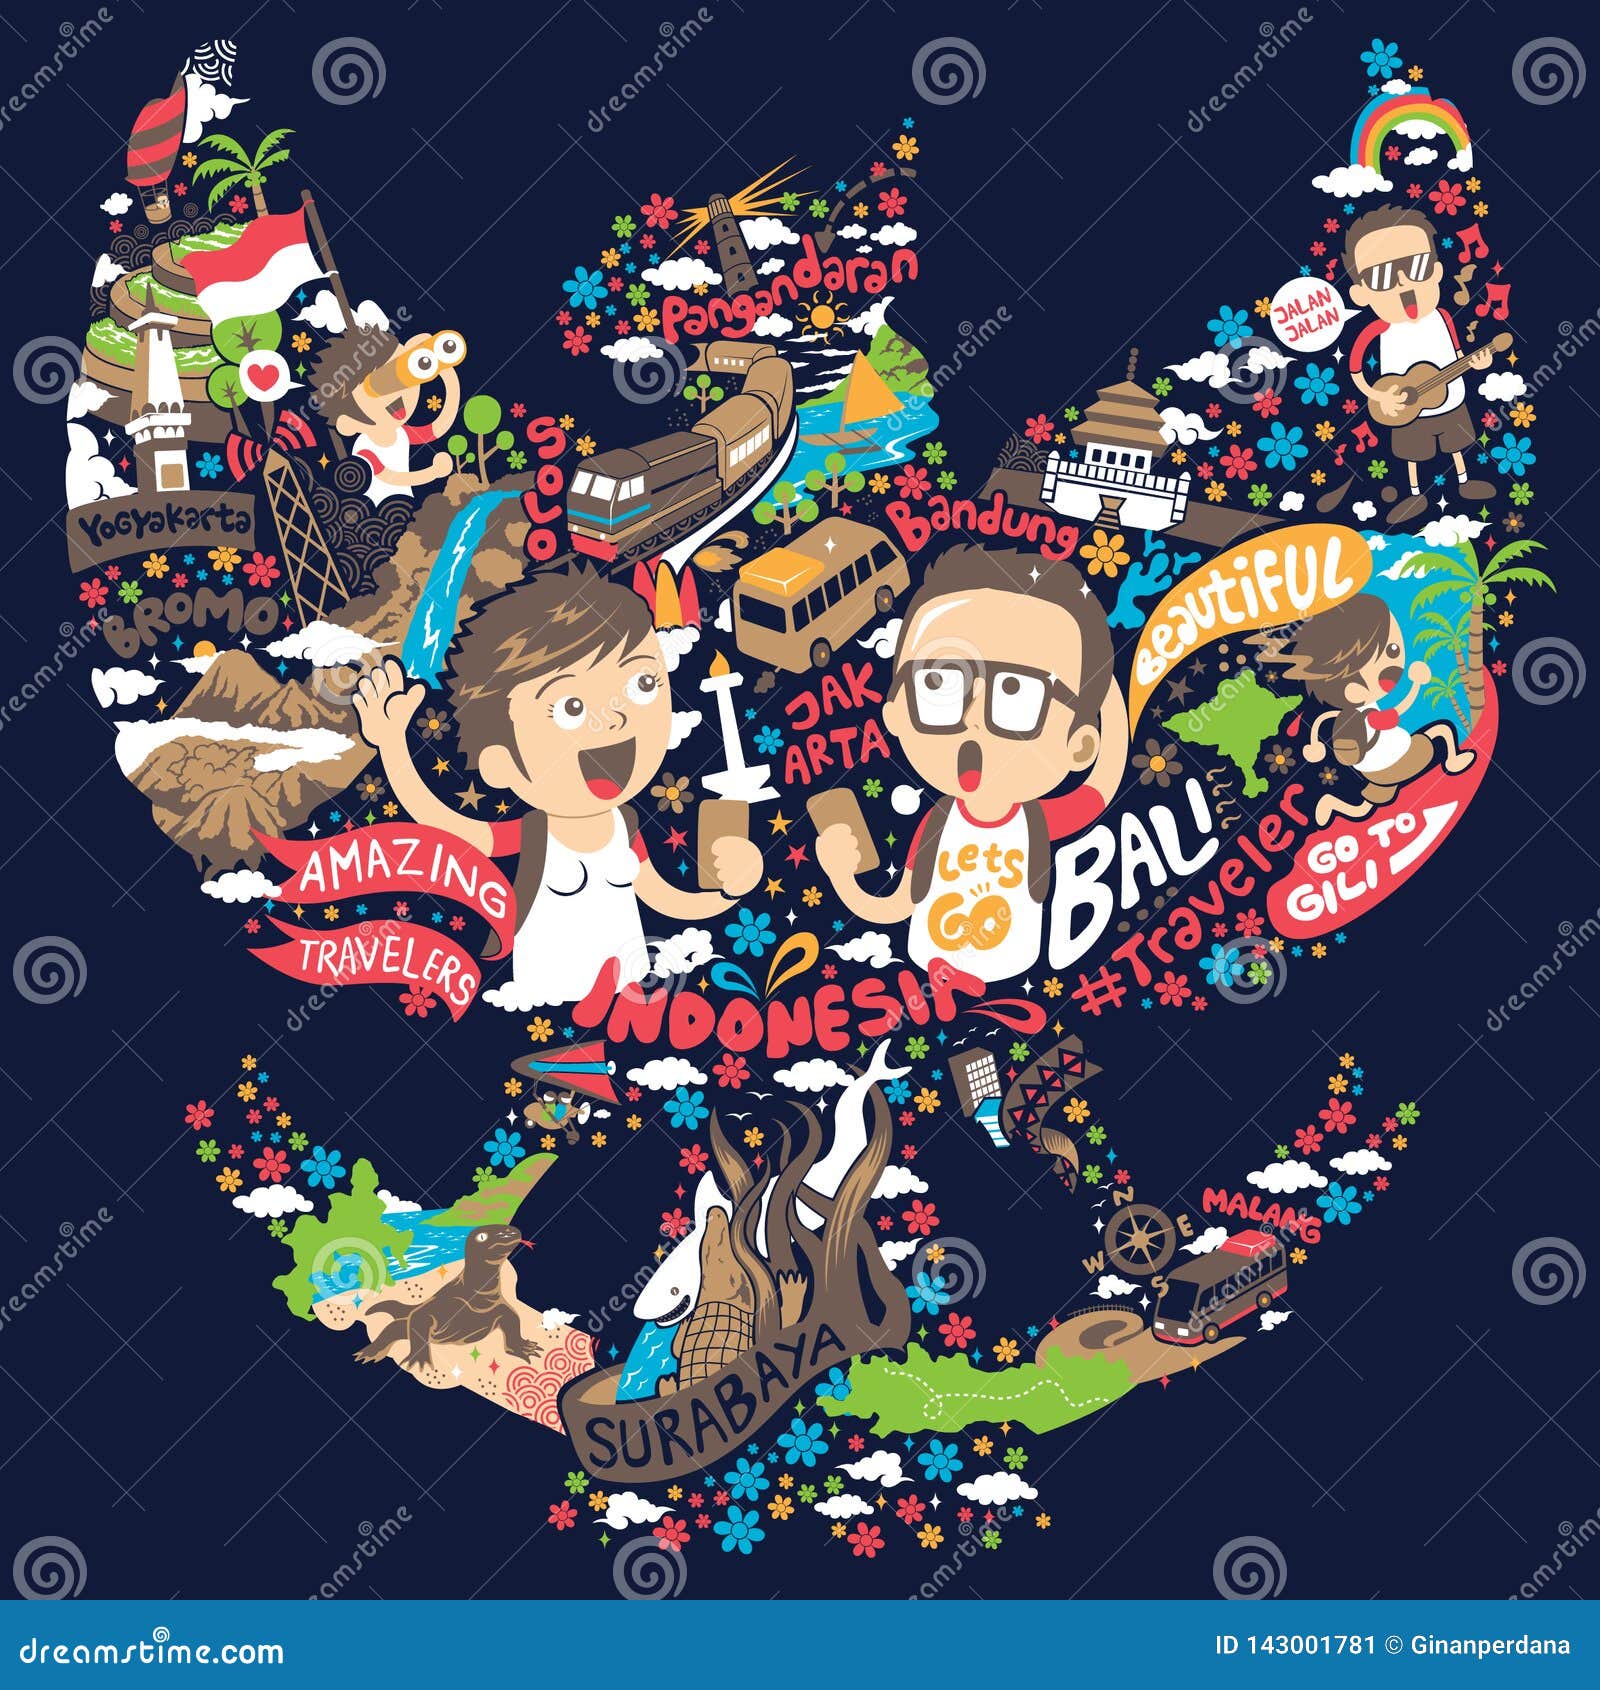 Traveling To Indonesia In Garuda Shape Illustration Stock Vector Illustration Of Holiday Icon 143001781